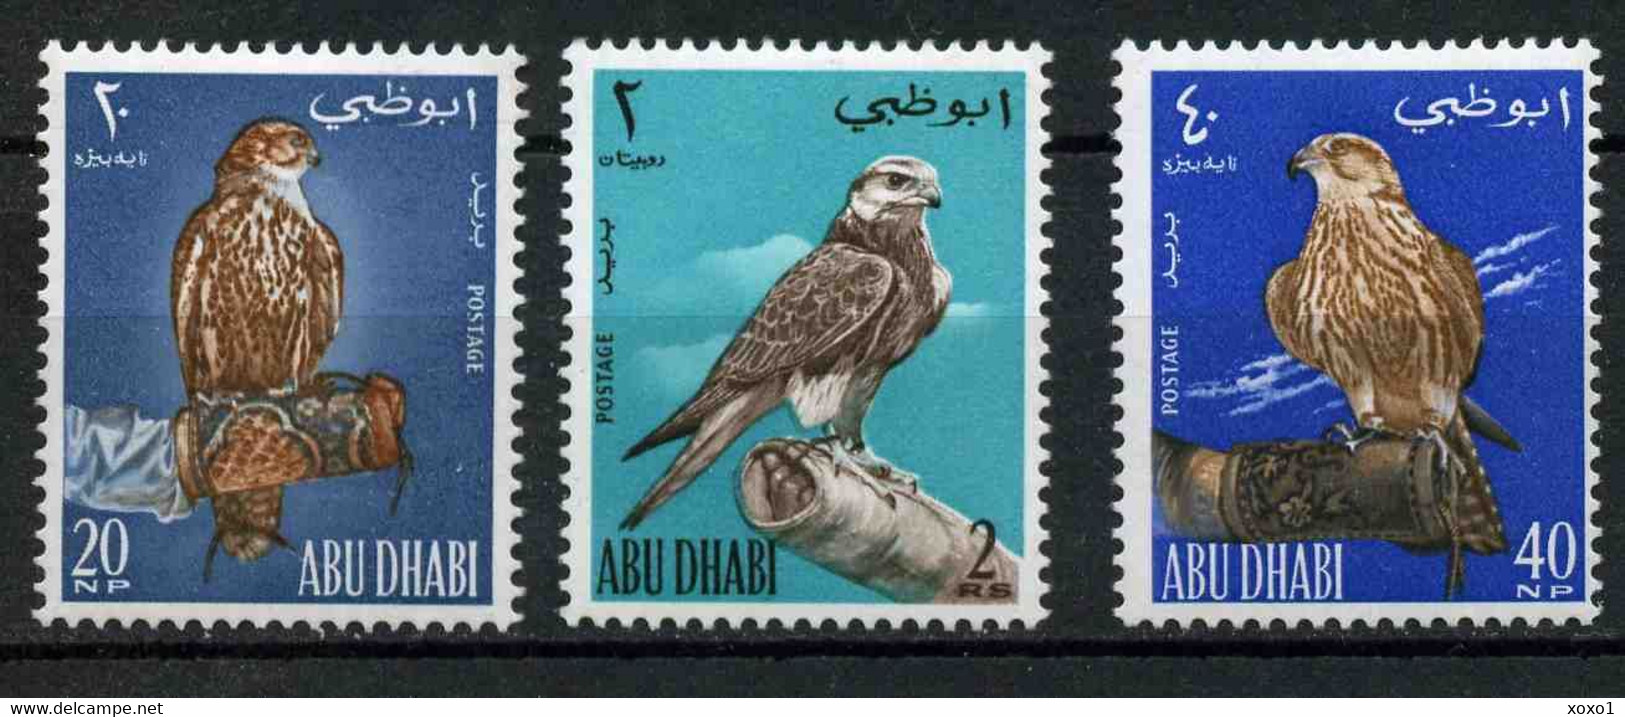 Abu Dhabi 1965  MiNr. 12 - 14   BIRDS Of Prey Lanner Falcon  3v MNH **     80.00 € - Abu Dhabi